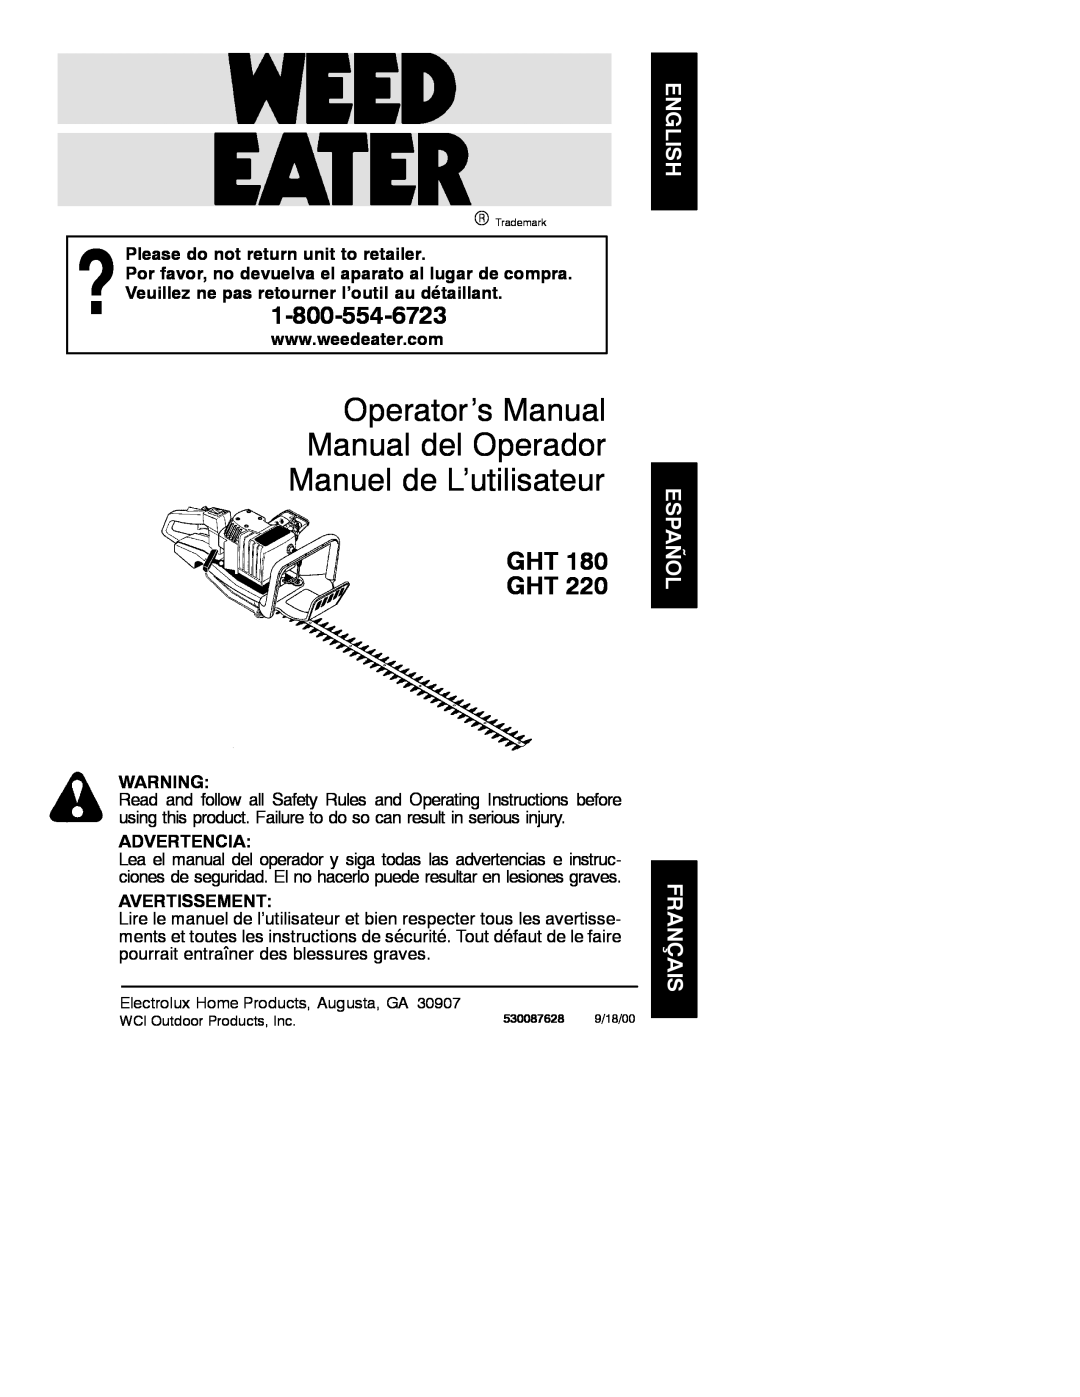 Weed Eater 530087628 operating instructions Operator’s Manual Manual del Operador, Manuel de L’utilisateur, Ght Ght 